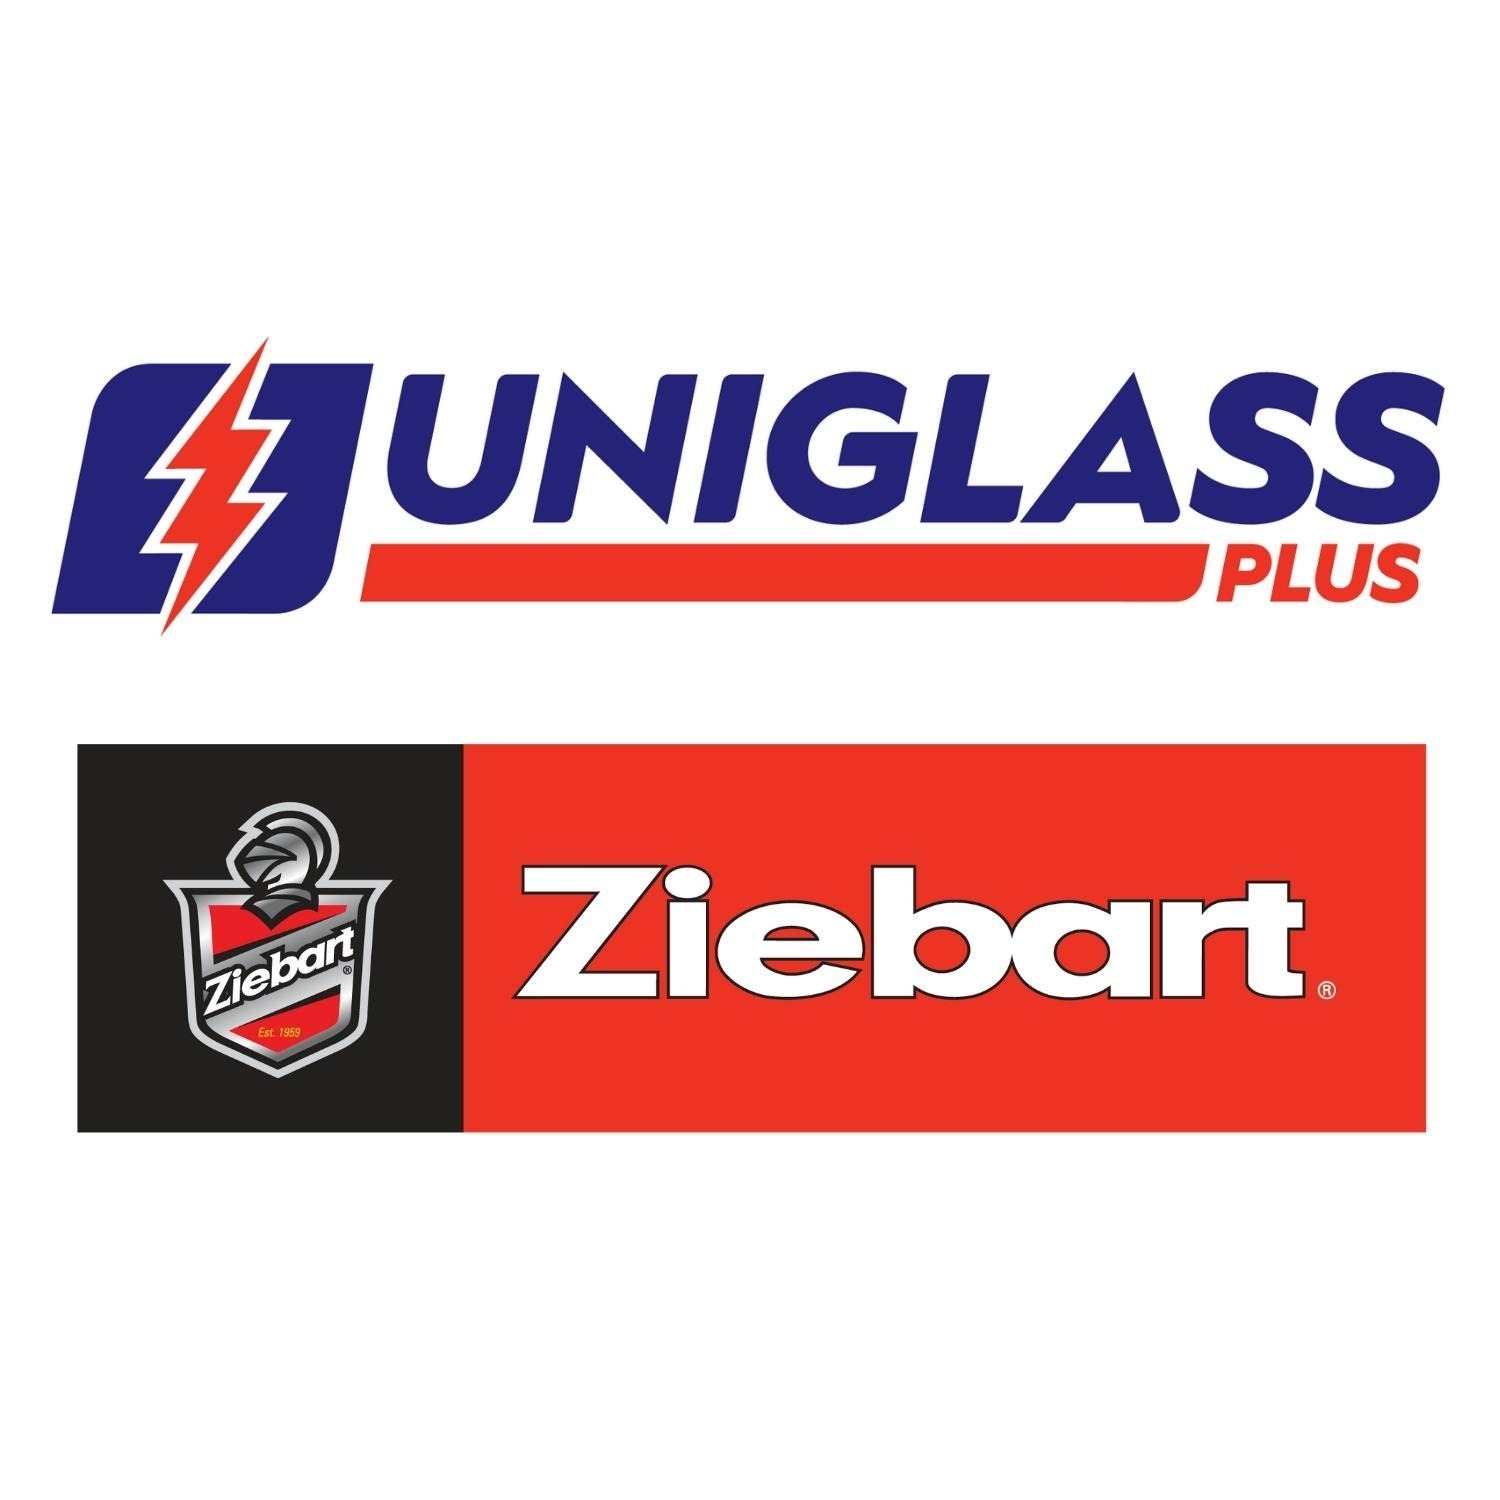 View UniglassPlus / Ziebart’s Halifax profile